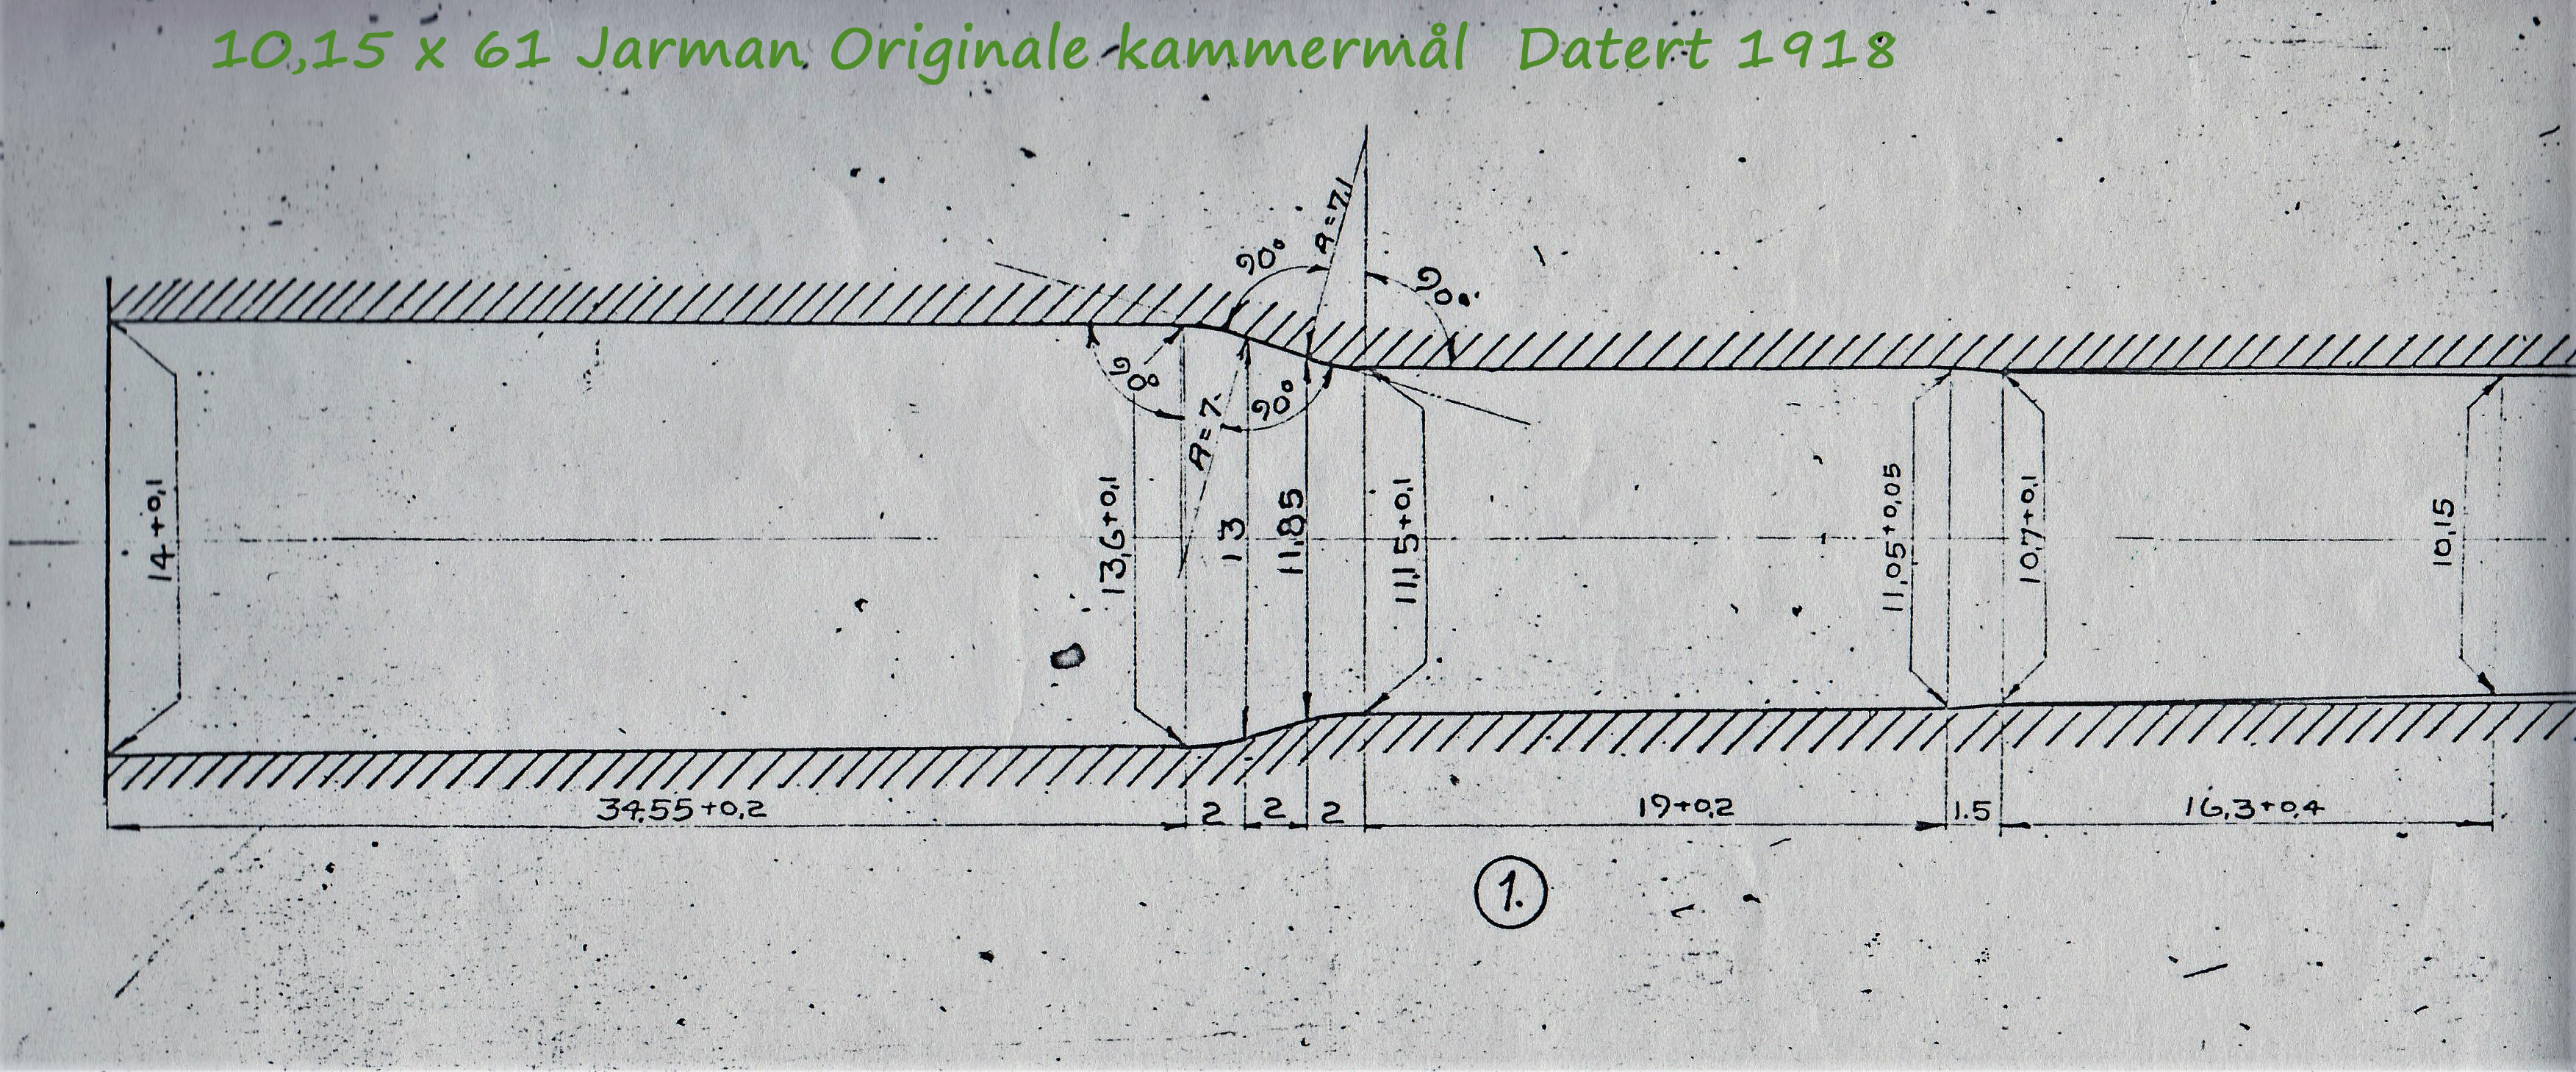 ./guns/rifle/bilder/Rifle-Kongsberg-Jarmann-M1884-1015-Jarmann-1918-1.jpg